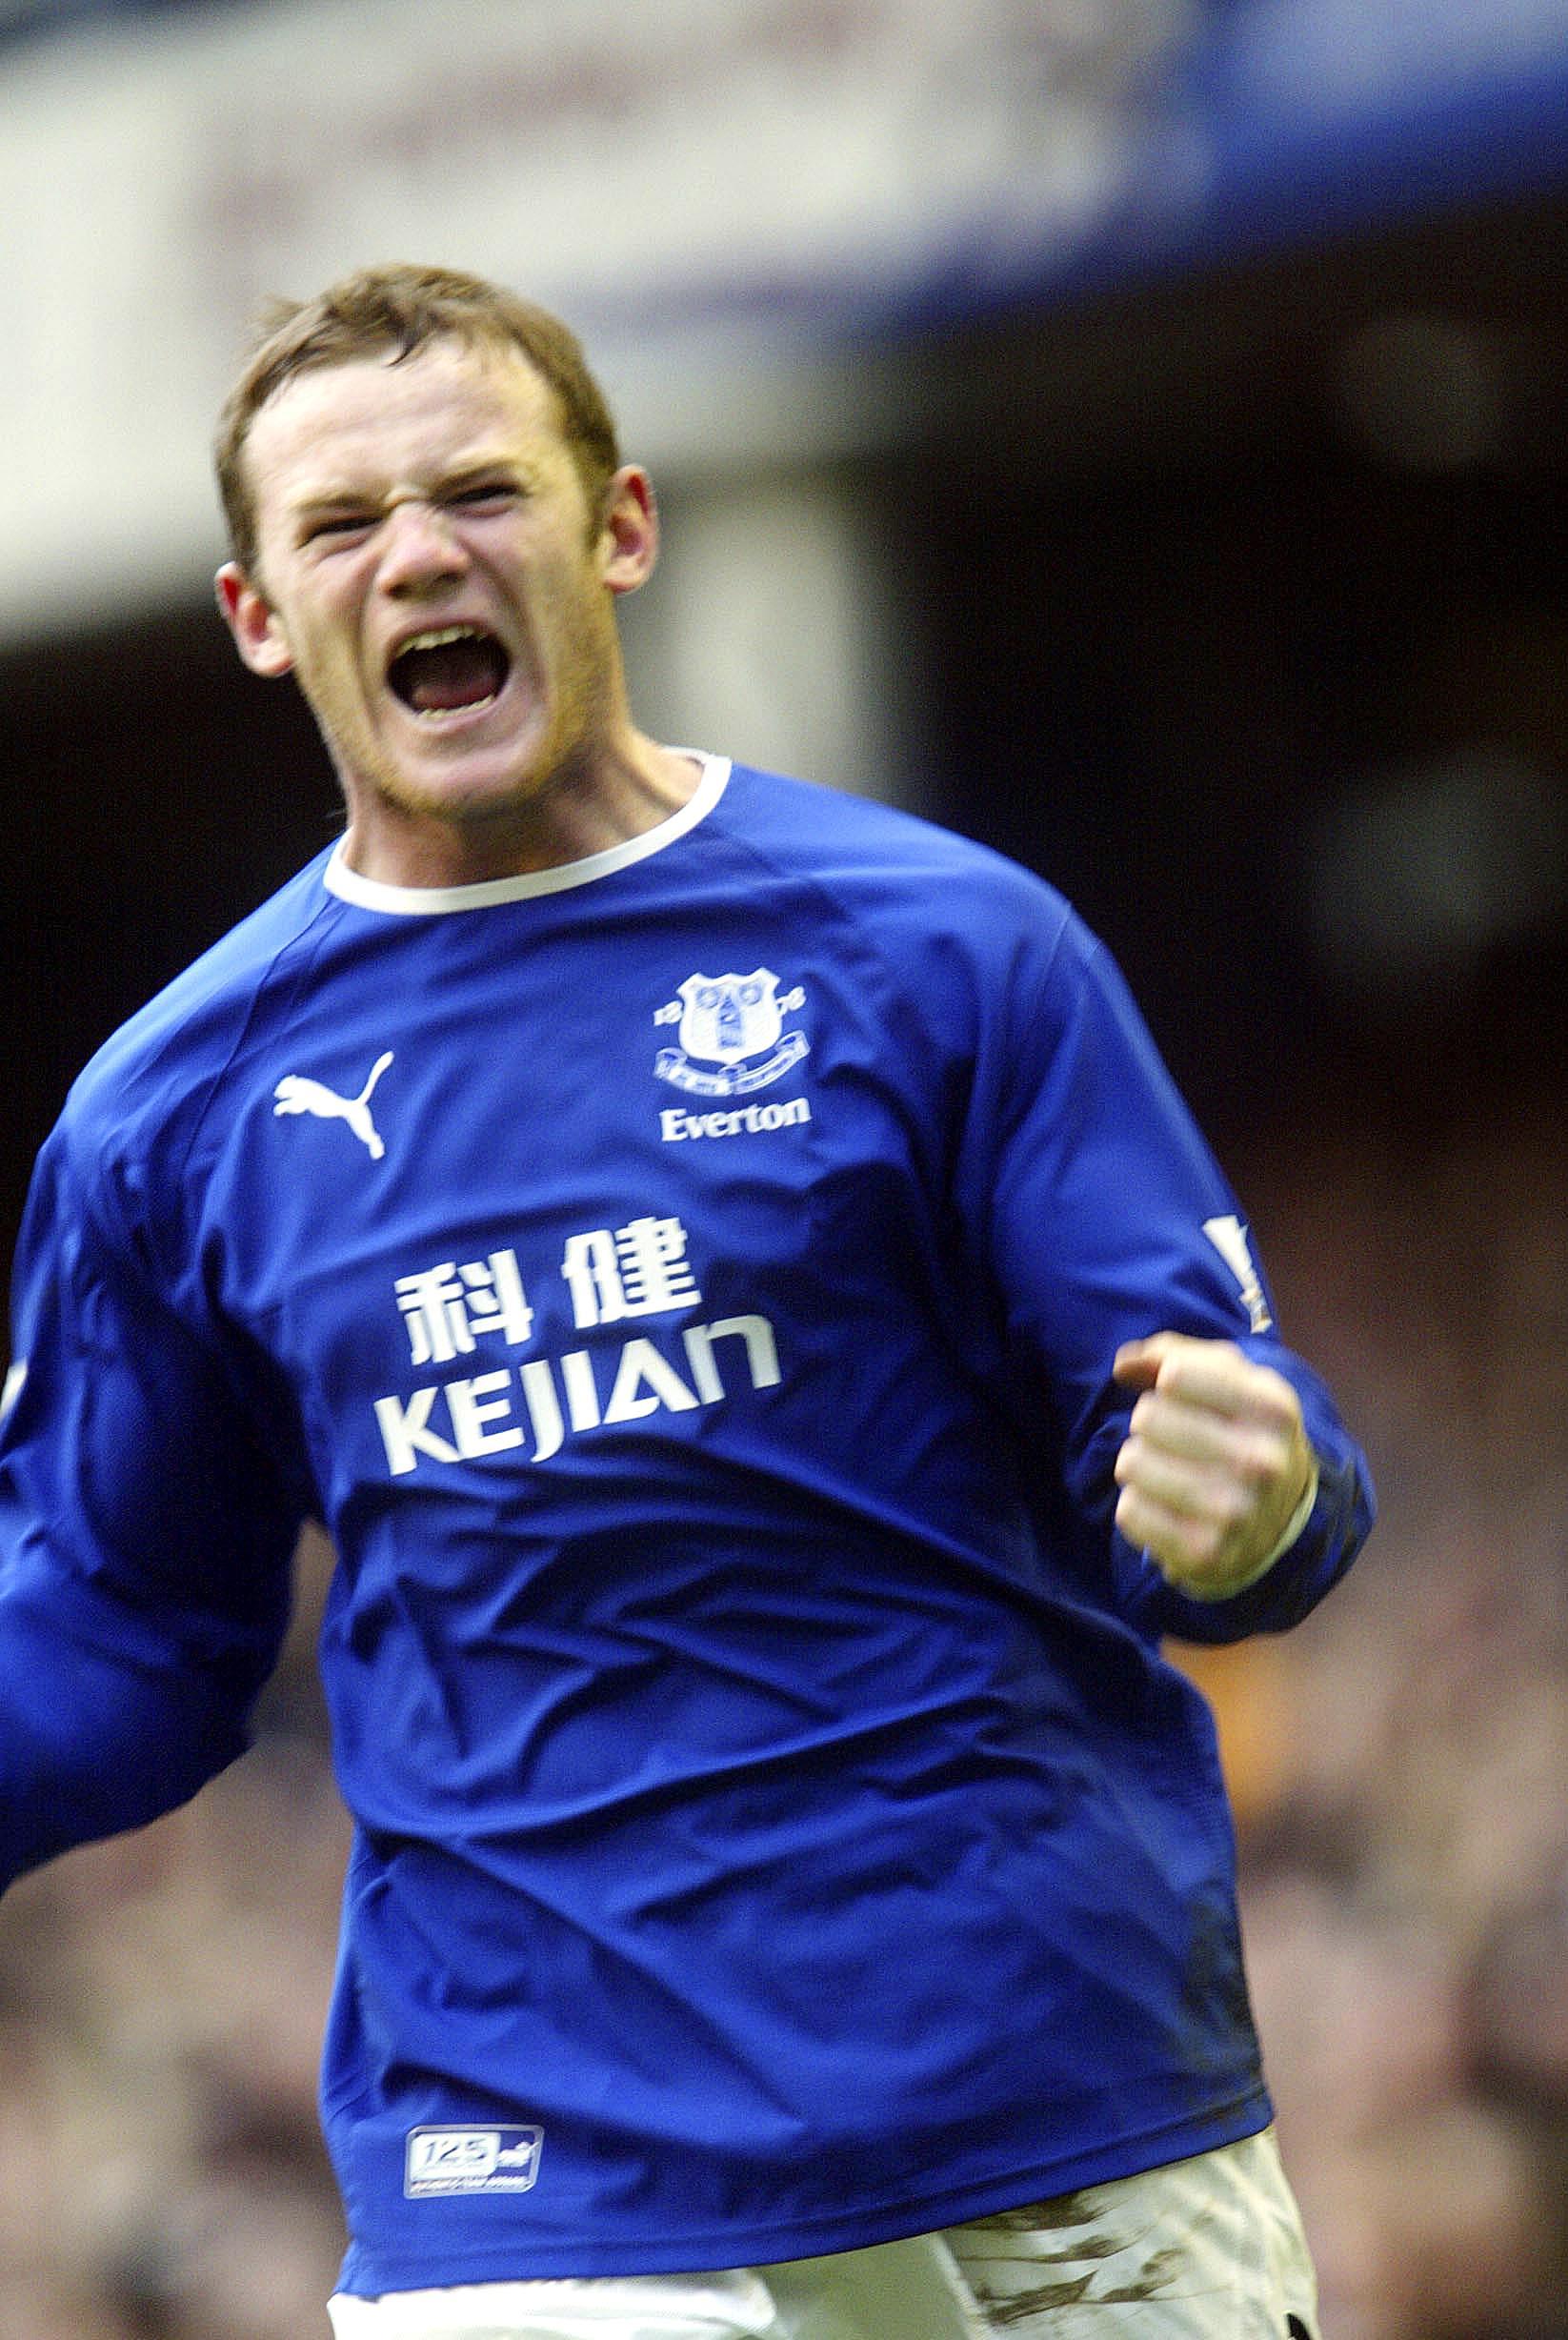 Rooney i Everton-tröja 20040313.